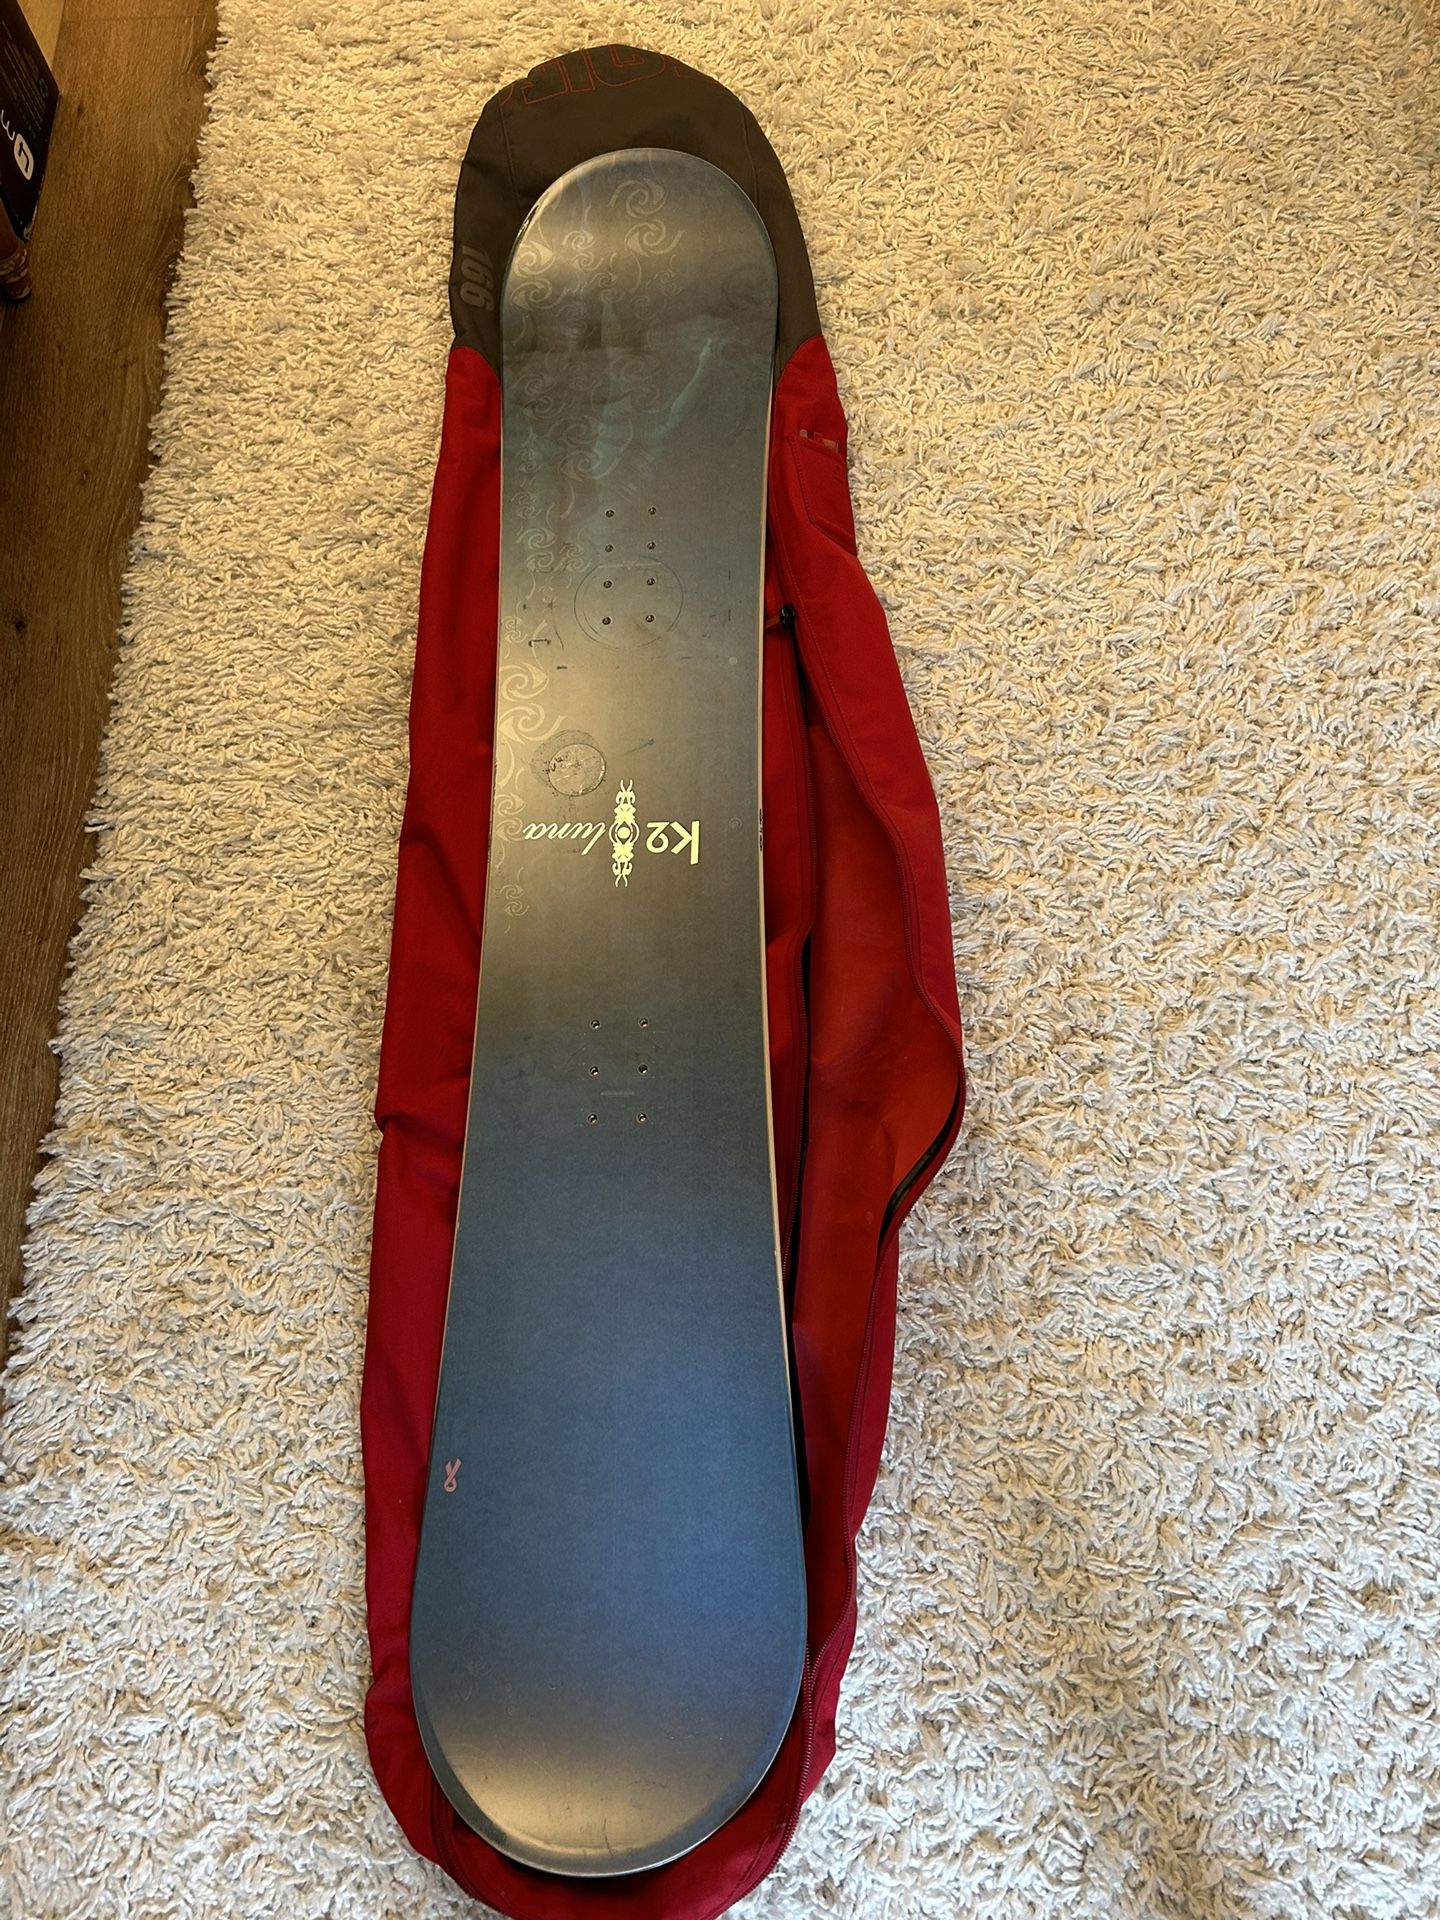 Snowboard and Bag